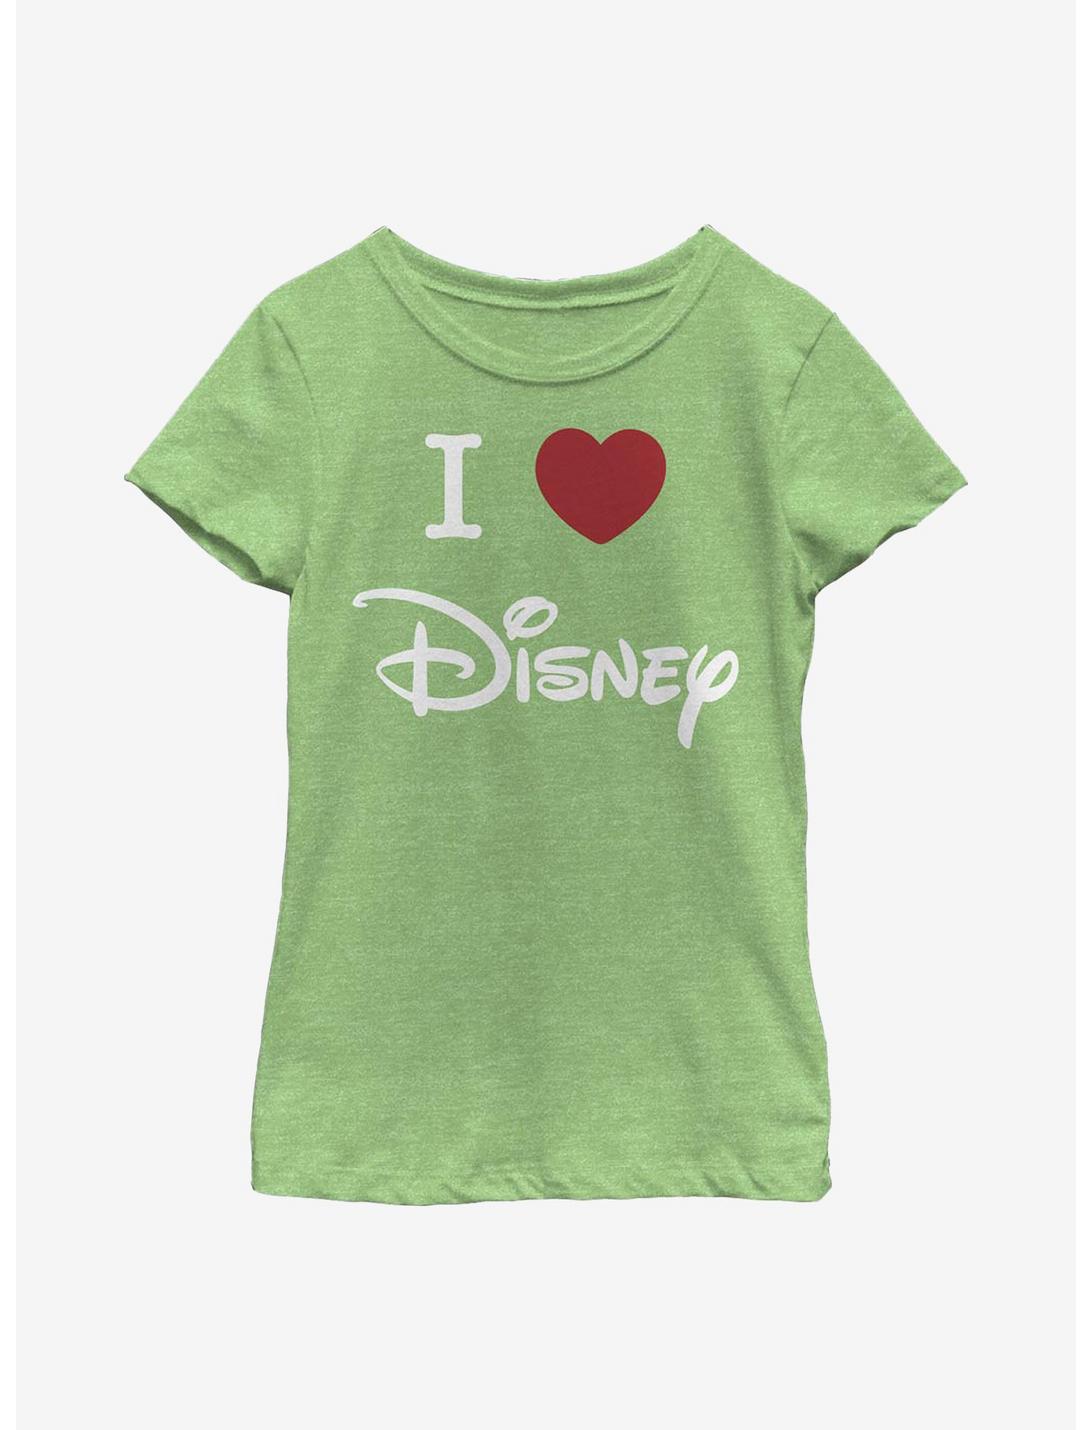 Disney Classic I Heart Disney Youth Girls T-Shirt, GRN APPLE, hi-res